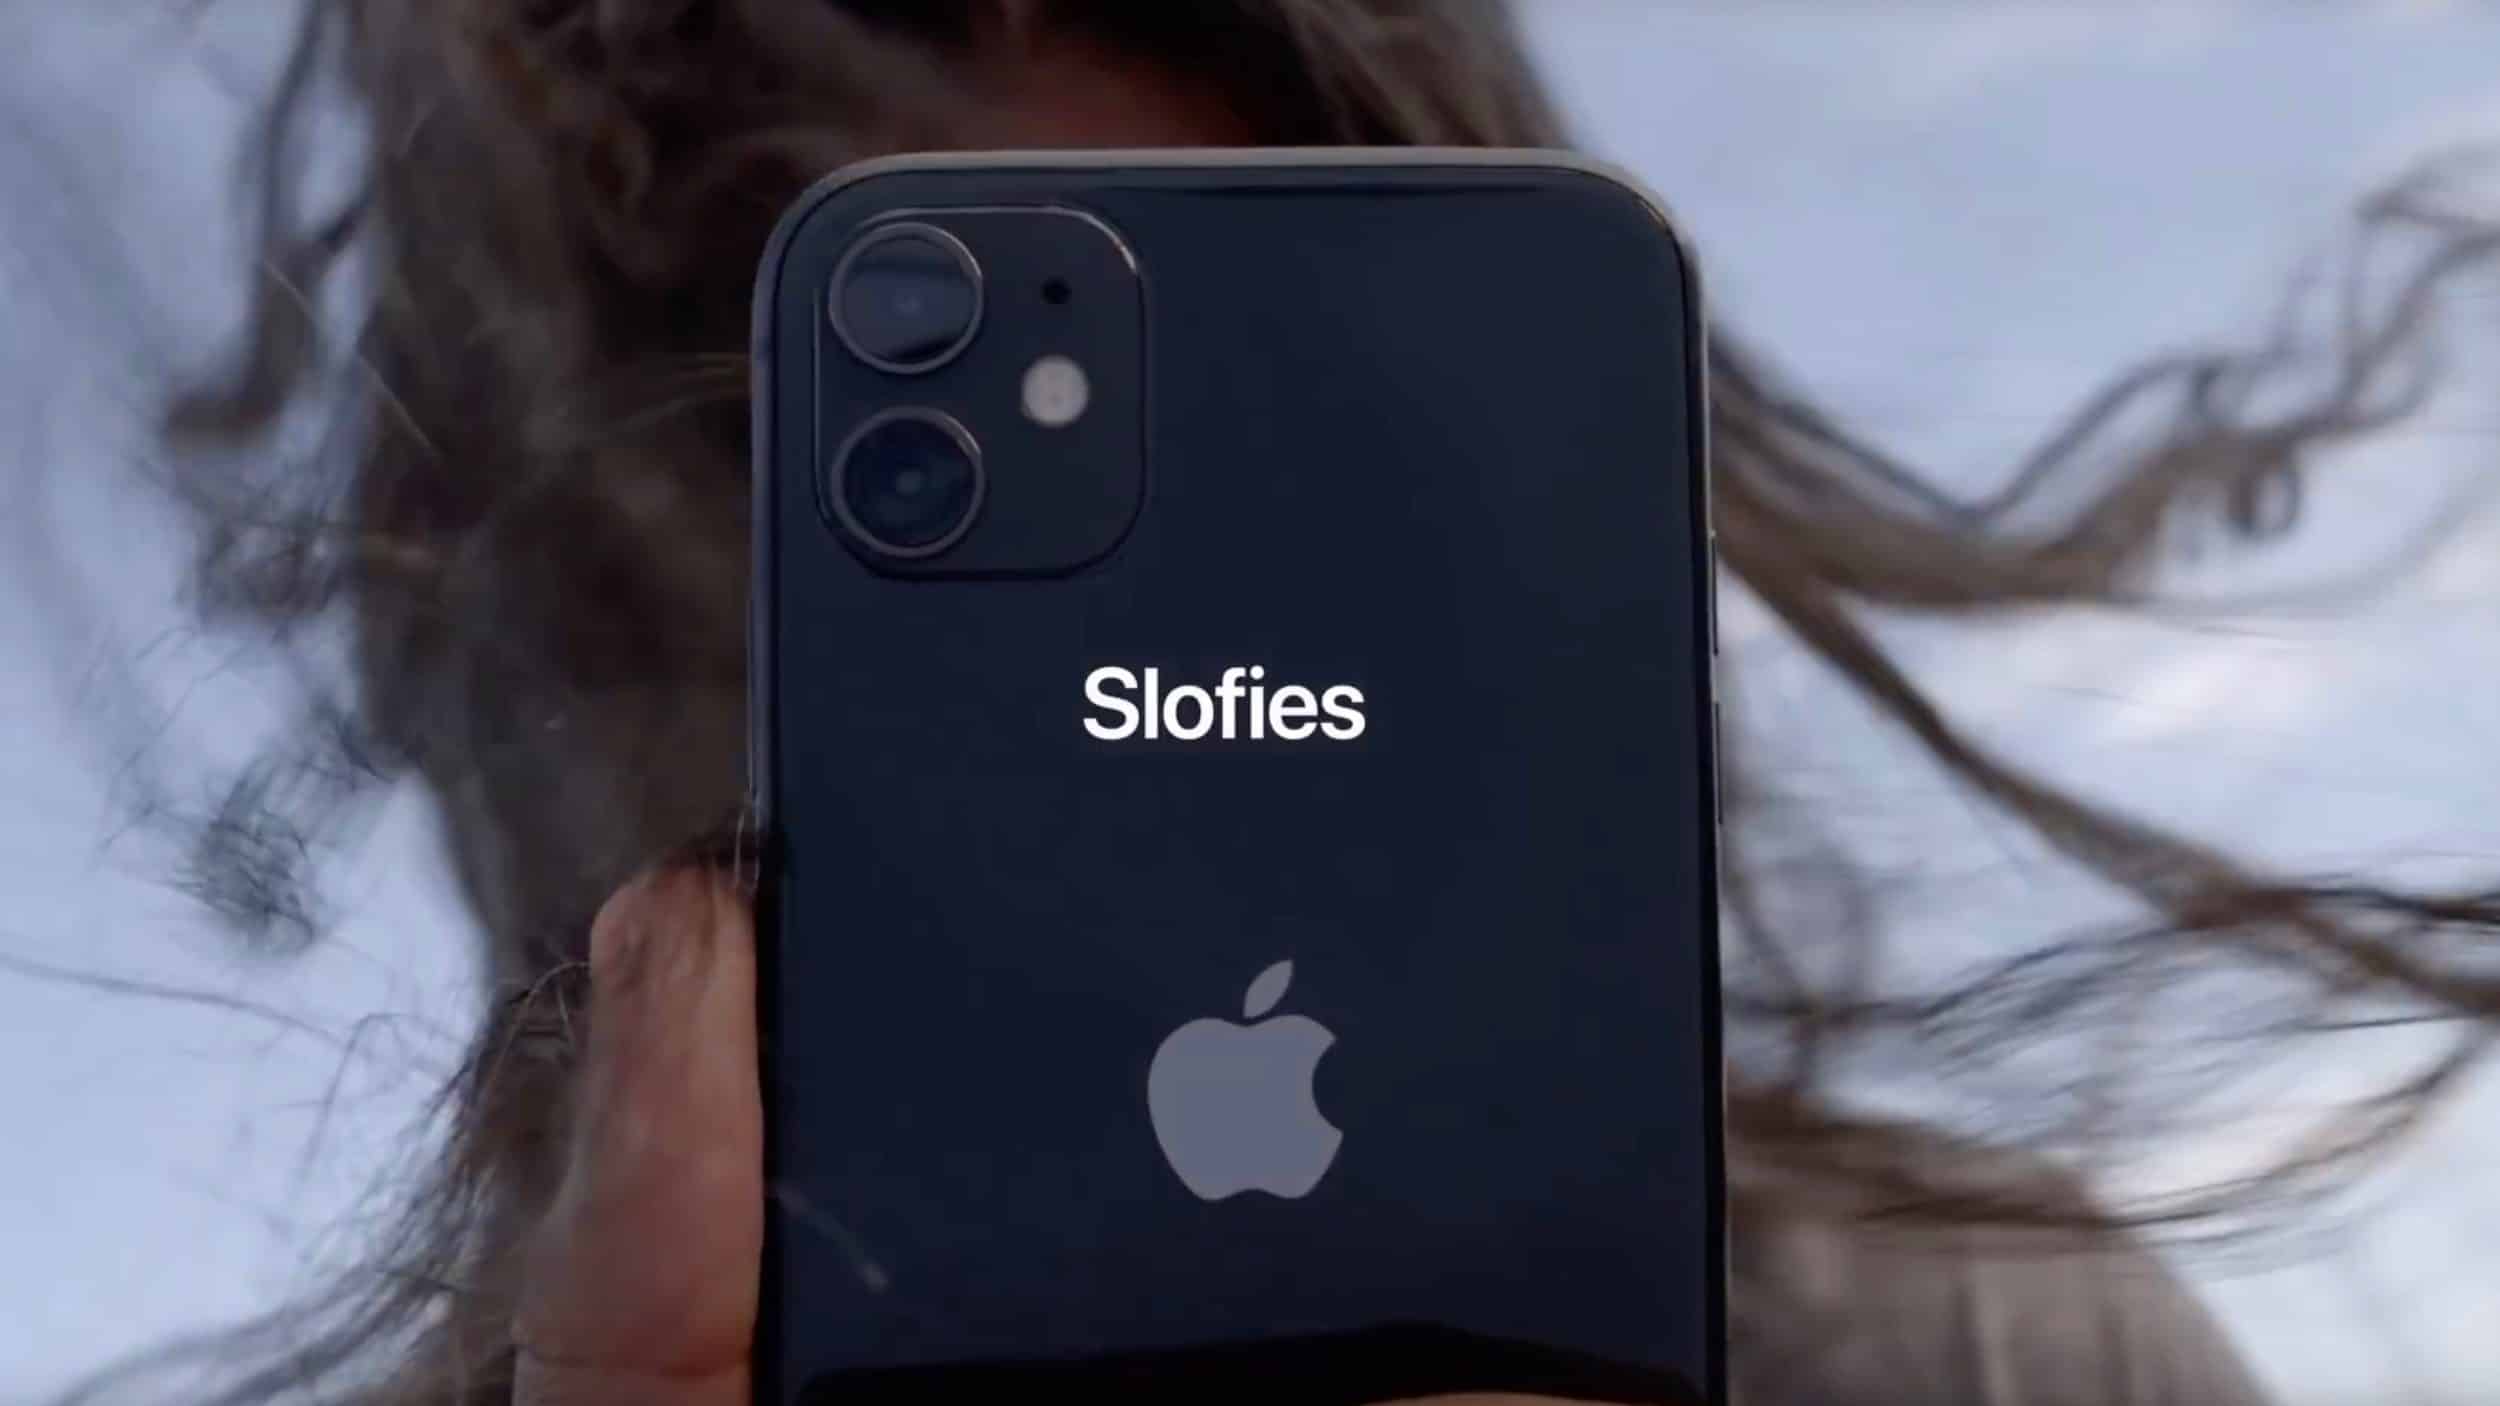 New iPhone 11 'Slofie' Videos Released